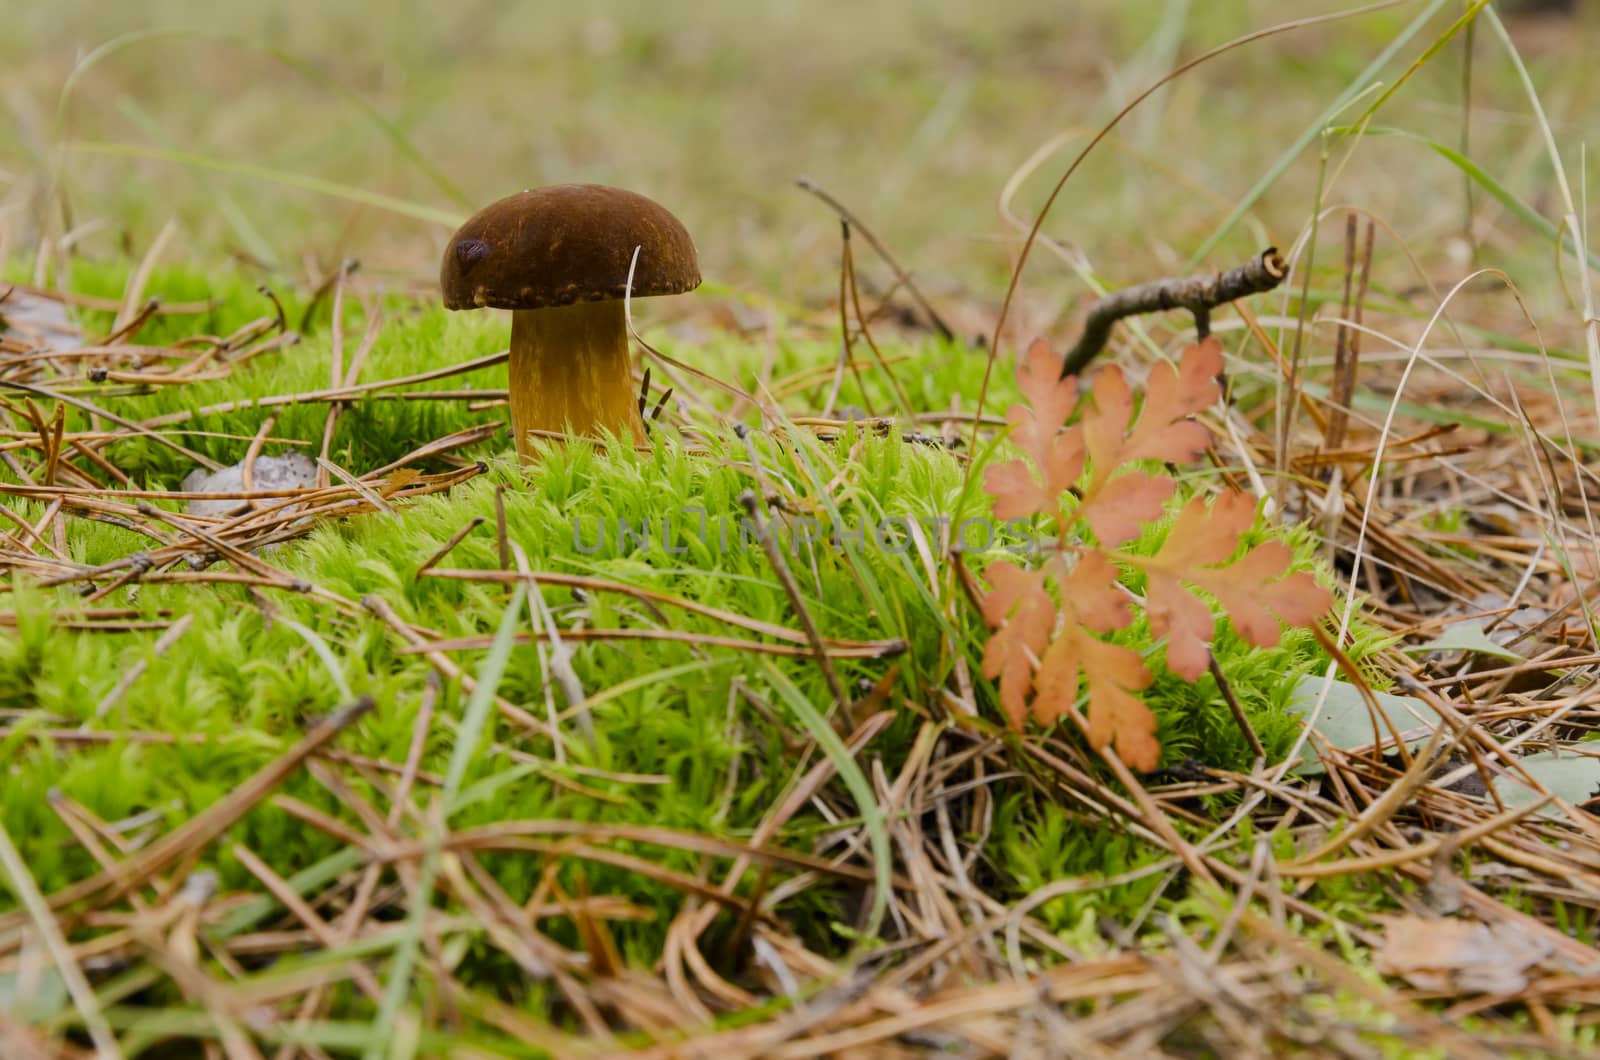 fresh white mushroom in a forest glade